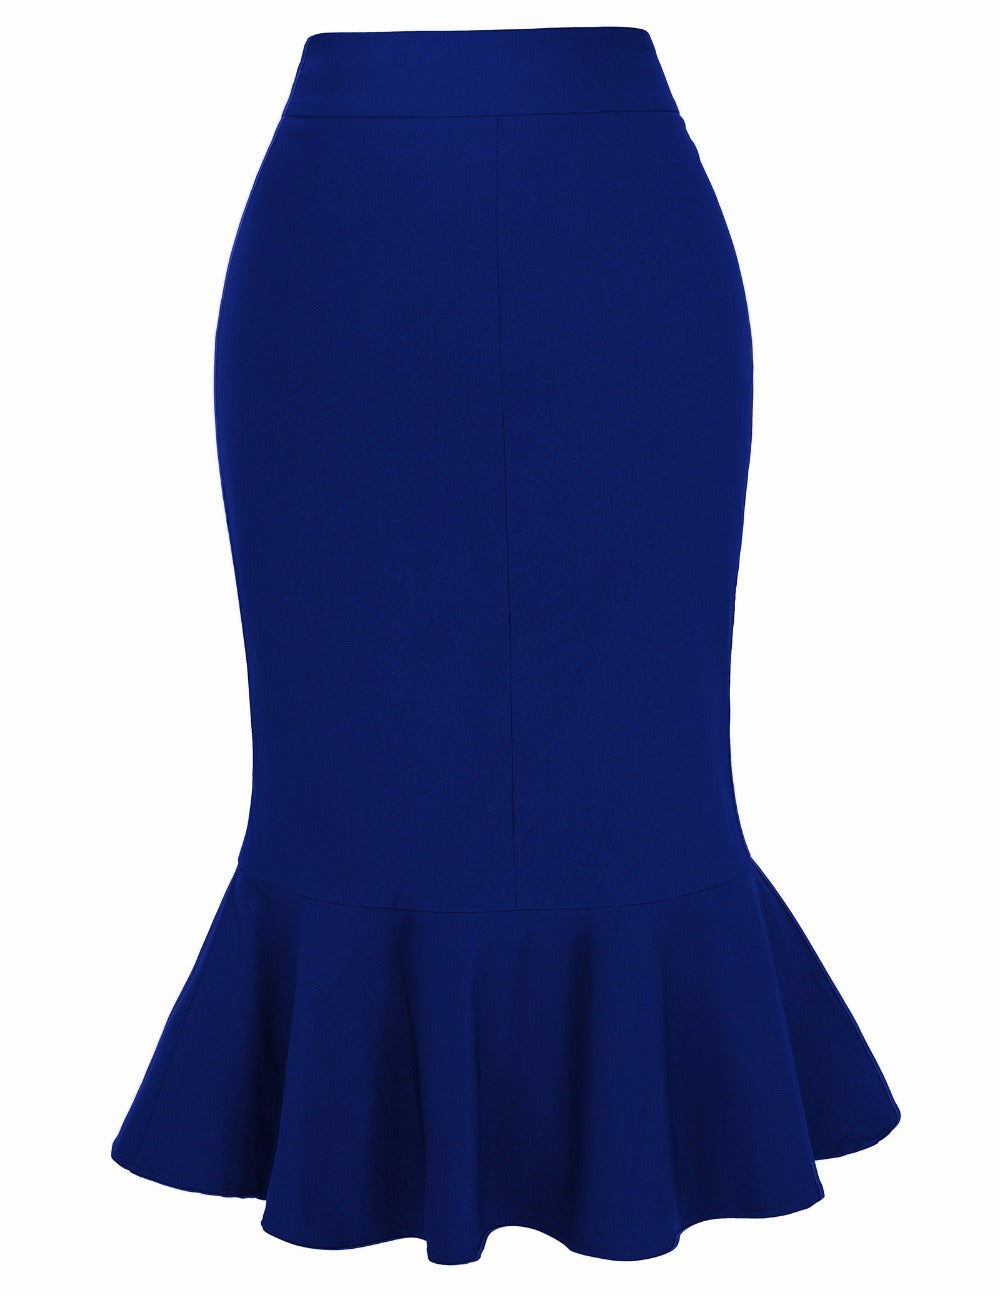 Kelly Royal Blue Pencil Skirt